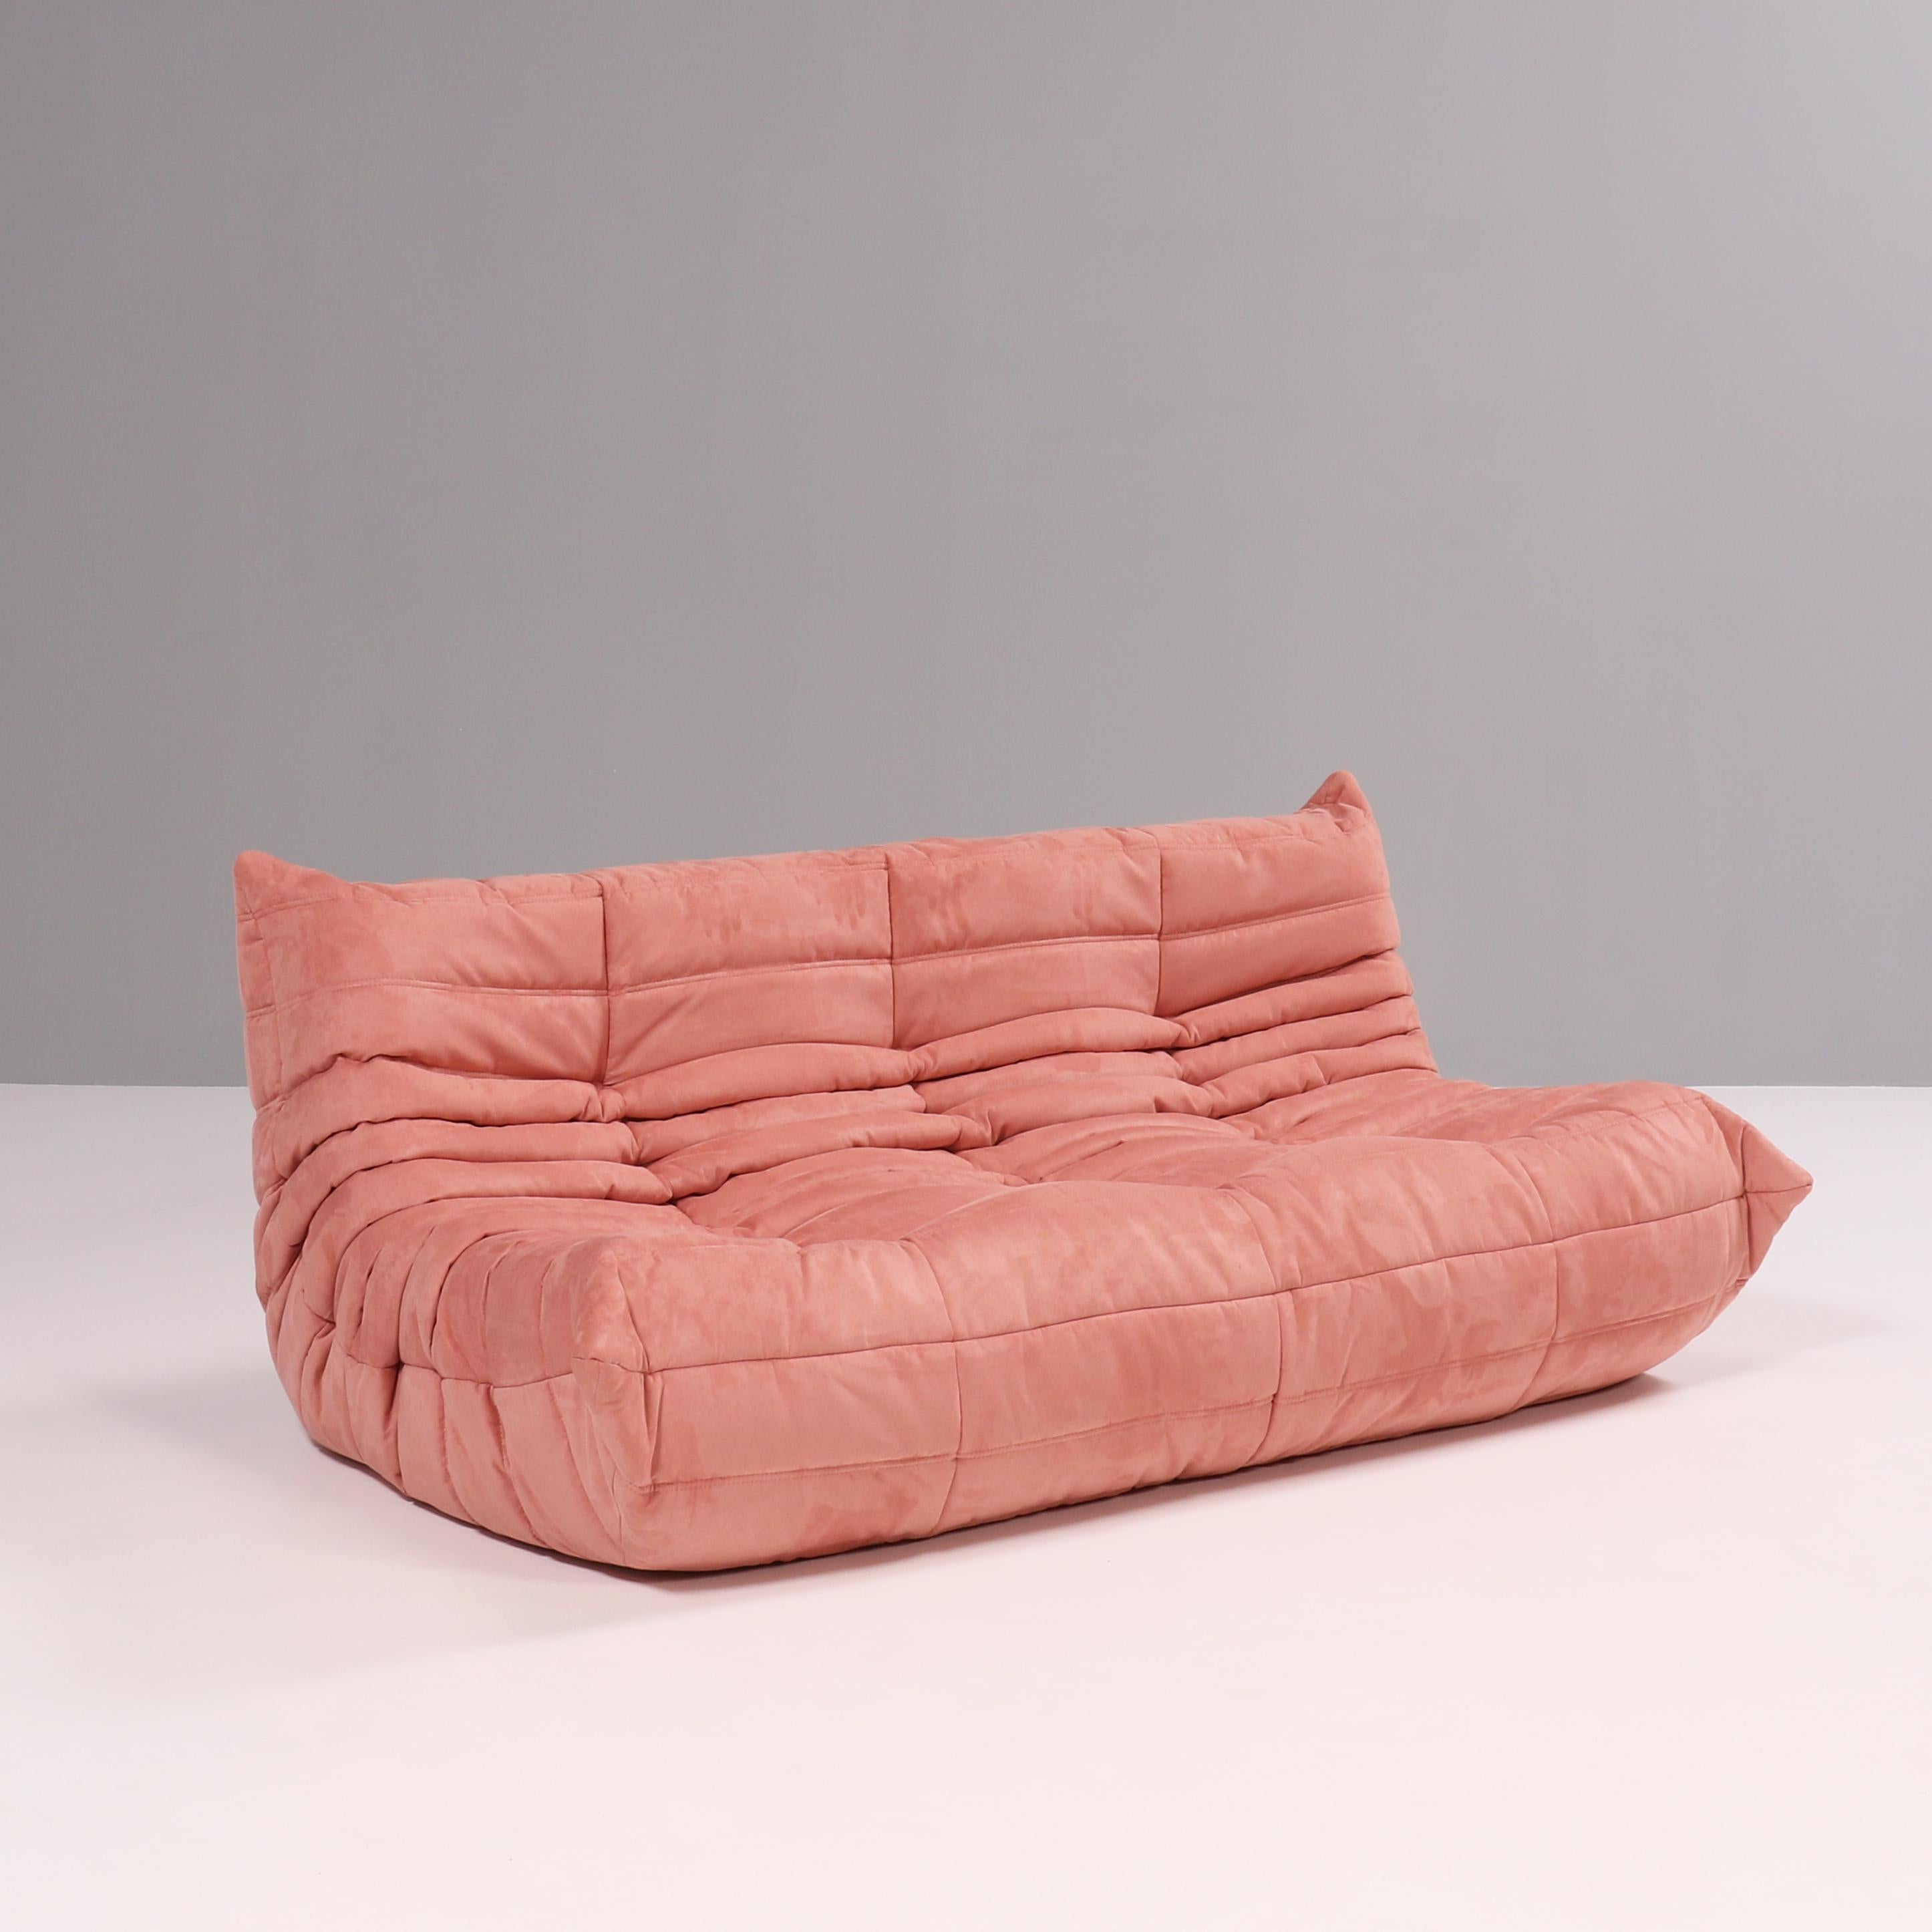 French Ligne Roset by Michel Ducaroy Togo Pink Corner Modular Sofa, Set of 3